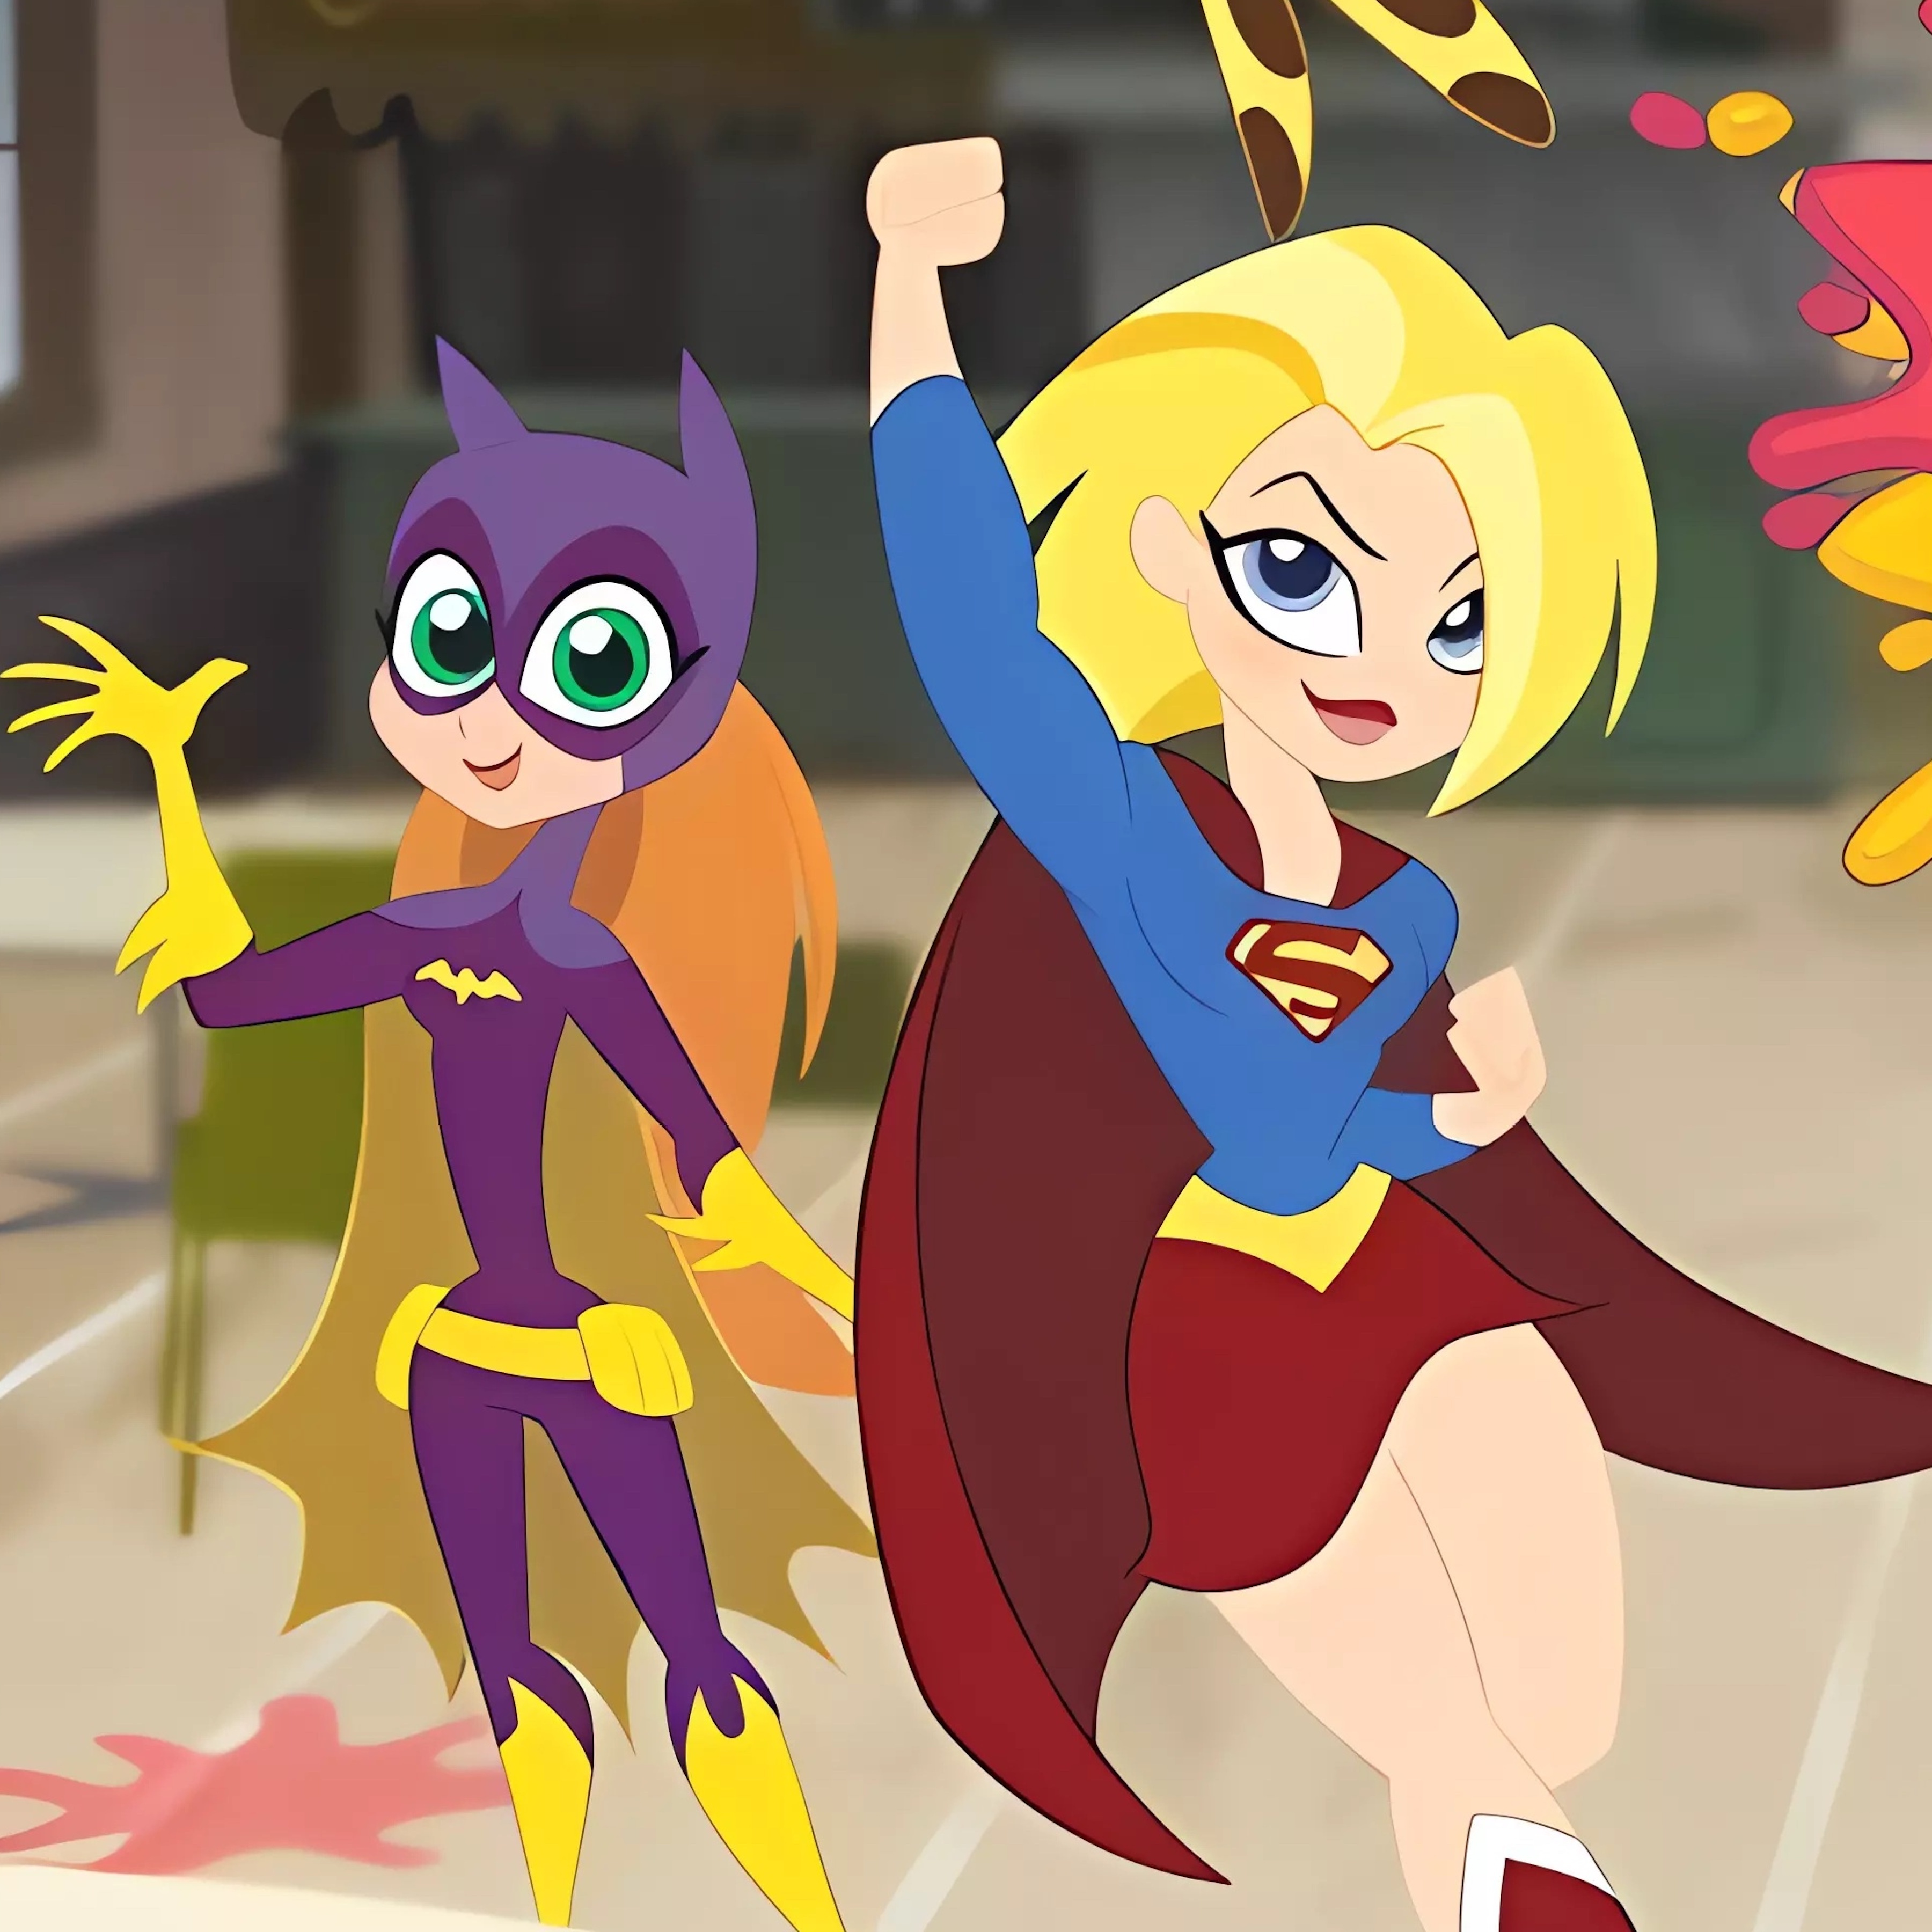 DC Super Hero Girls: Food Fight